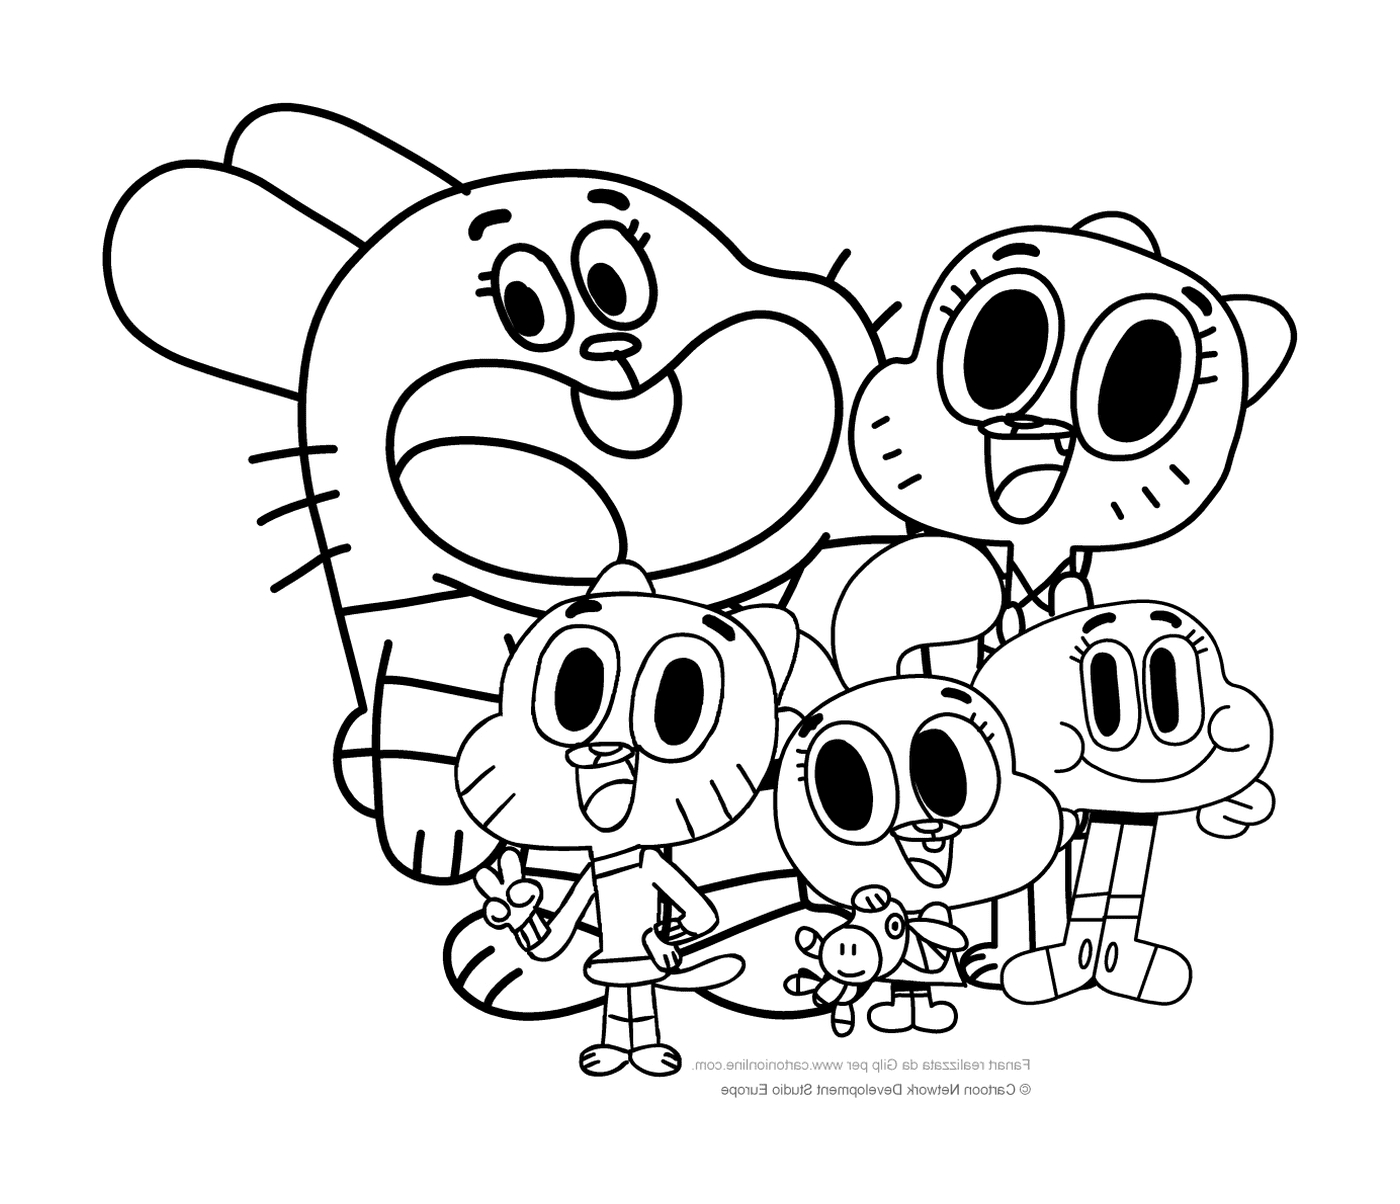  Familia de personajes animados 